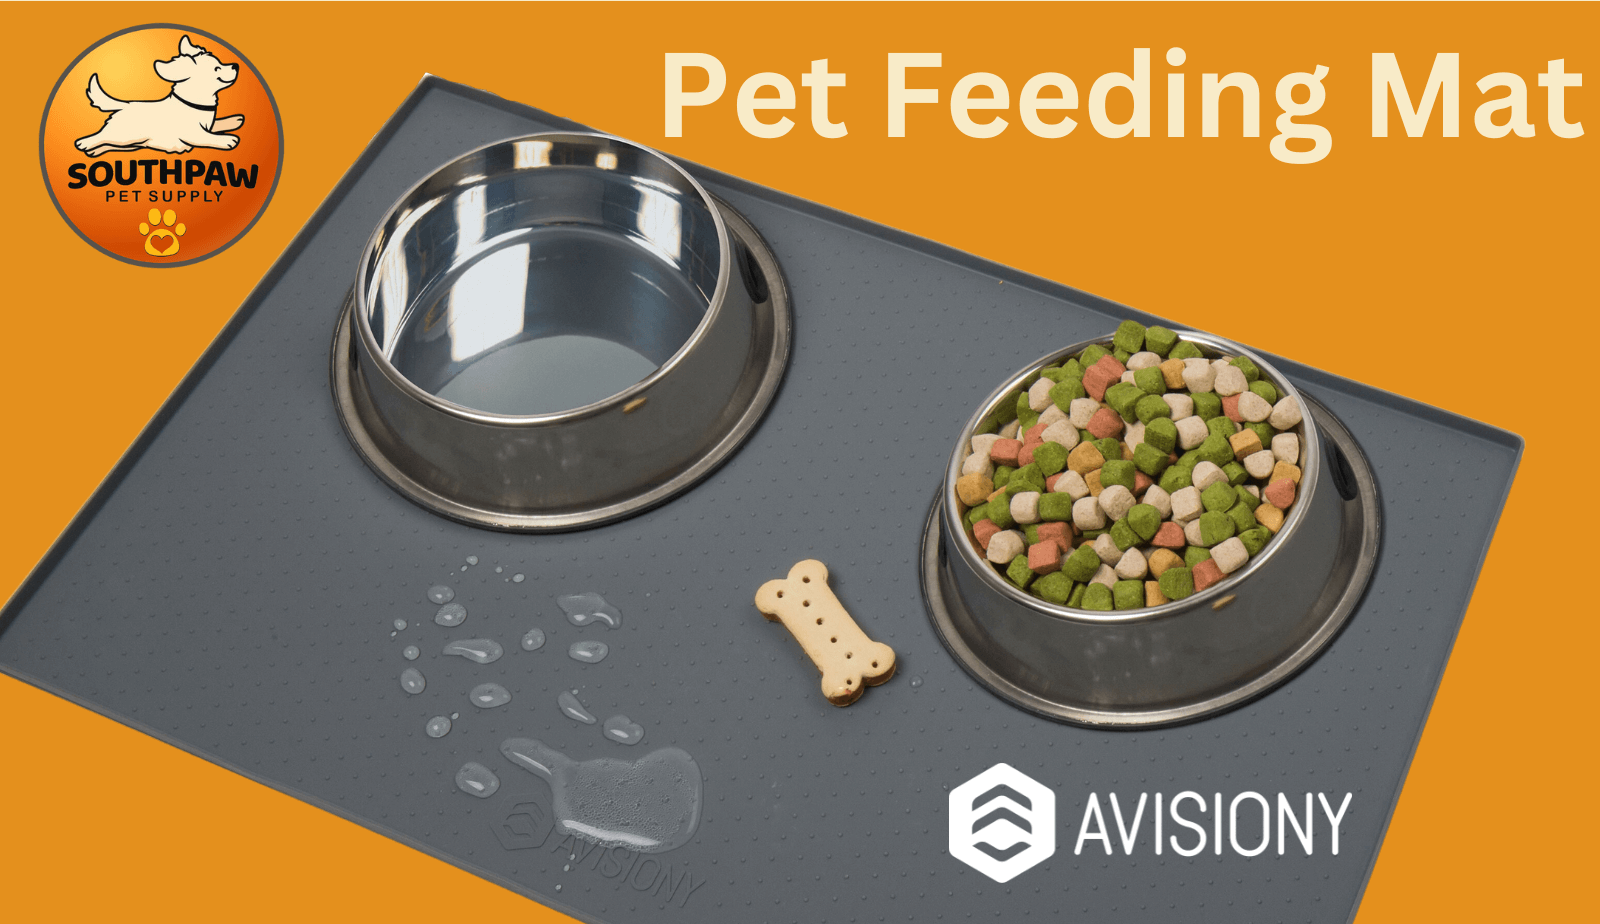 Avisiony Waterproof Pet Feeding Mat by SouthPaw Pet Supply, keep floors clean,